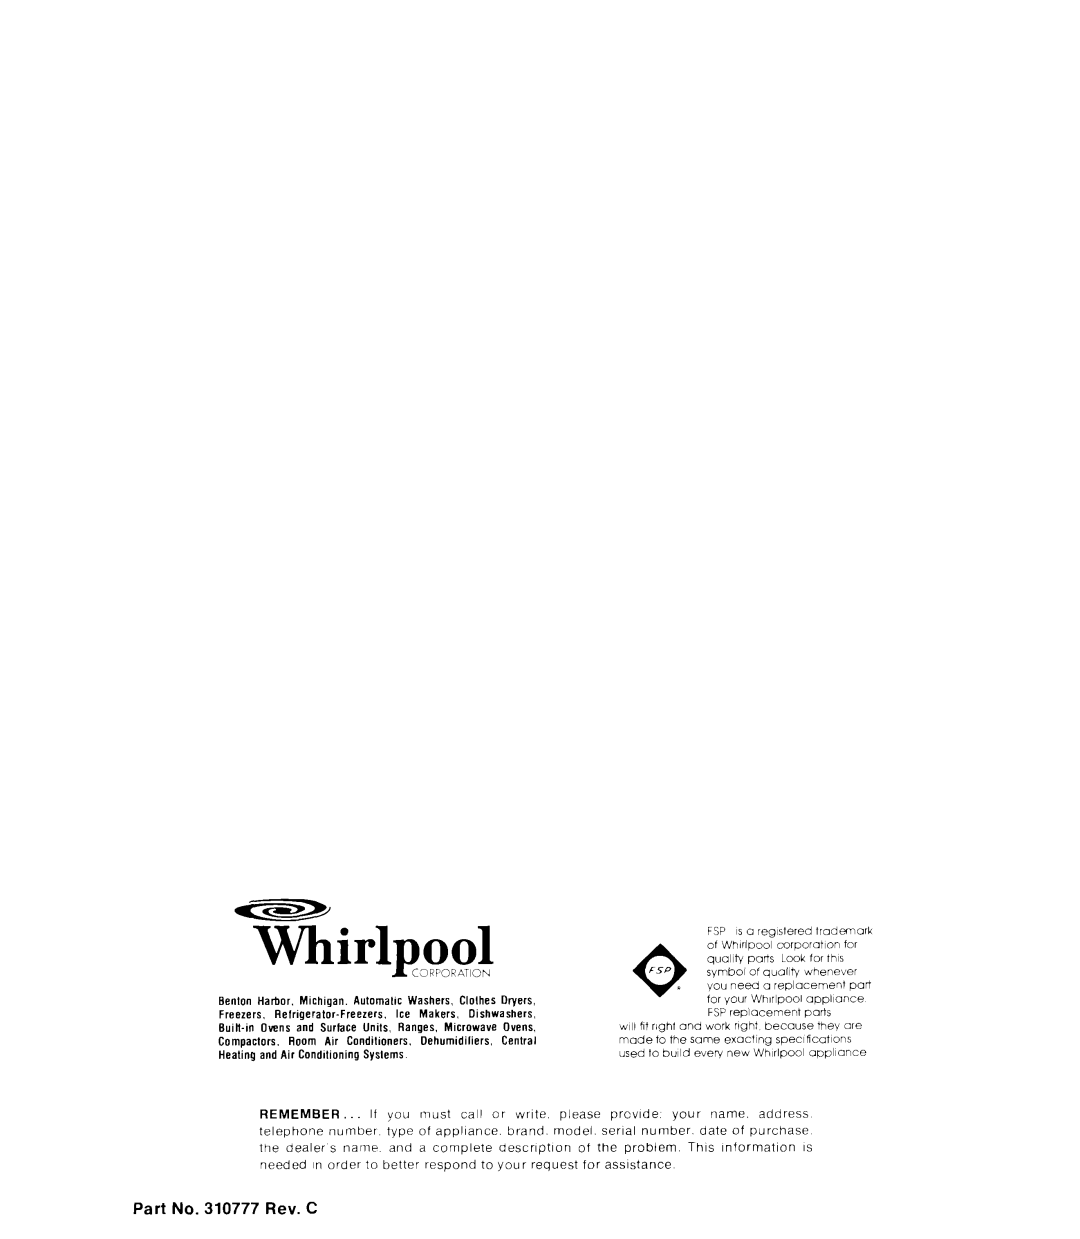 Whirlpool RJM 7400, RJM 2840 manual Whirlpool, Part No. 310777 Rev. C, oppl~ance 